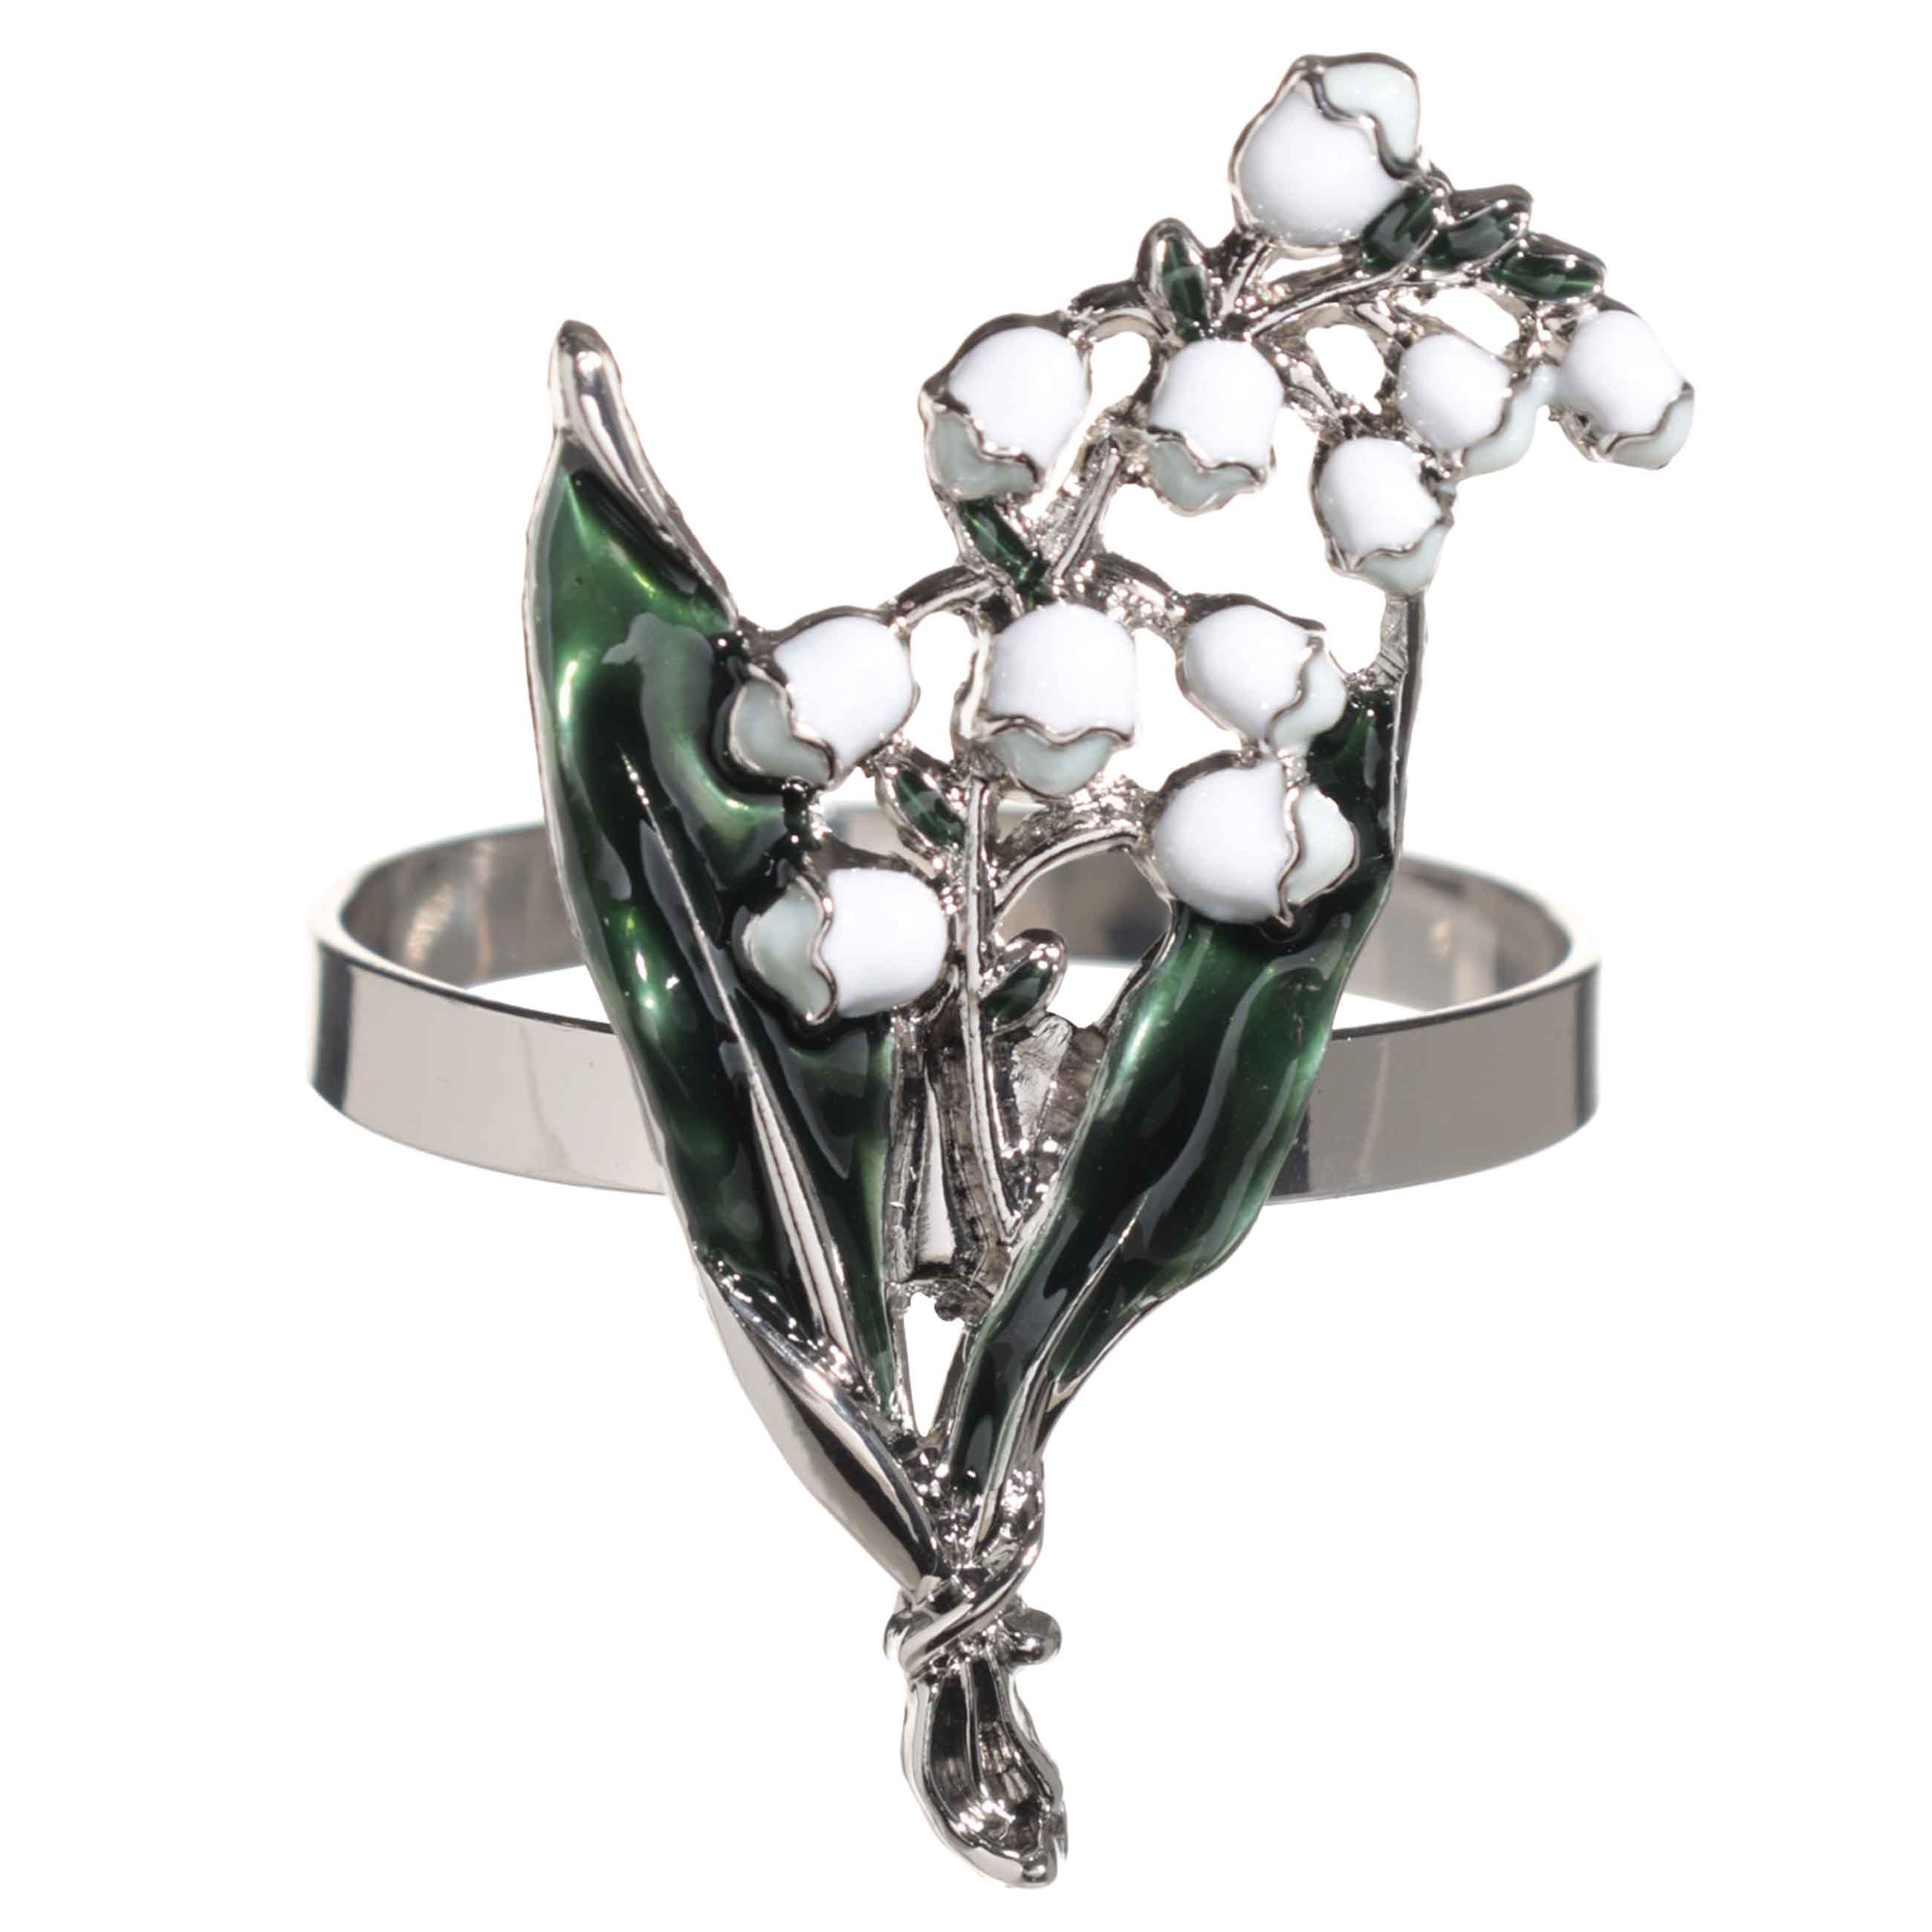 Кольцо для салфеток, 5 см, металл, зелено-серебристое, Ландыш с листьями, May-lily